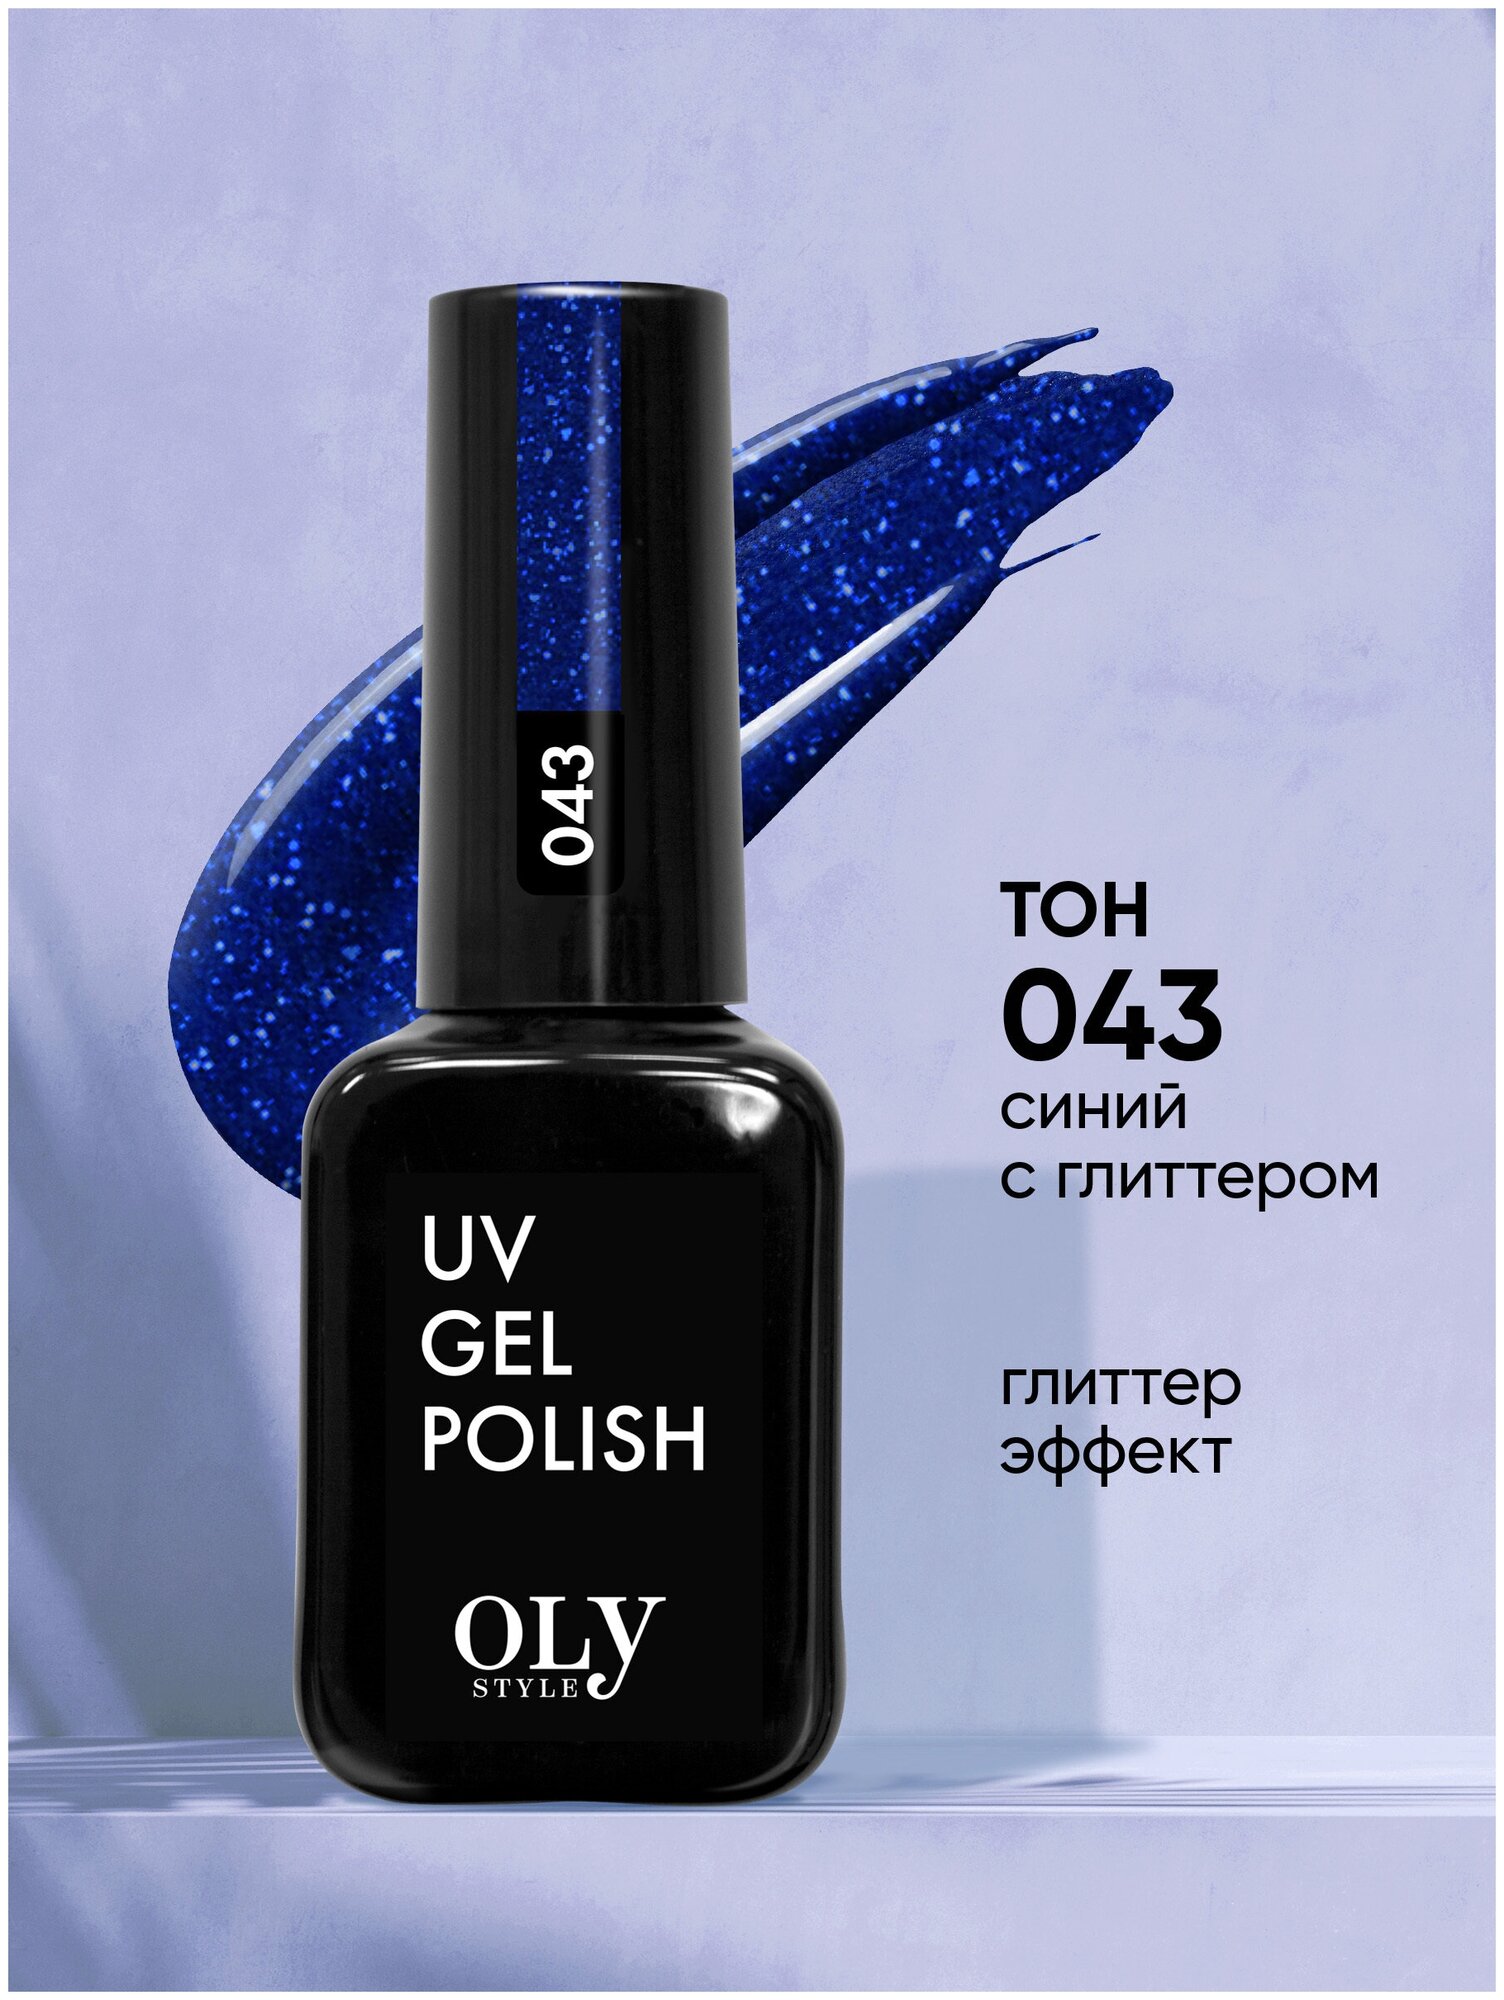 Olystyle Гель-лак для ногтей OLS UV, тон 043 синий с глиттером, 10мл